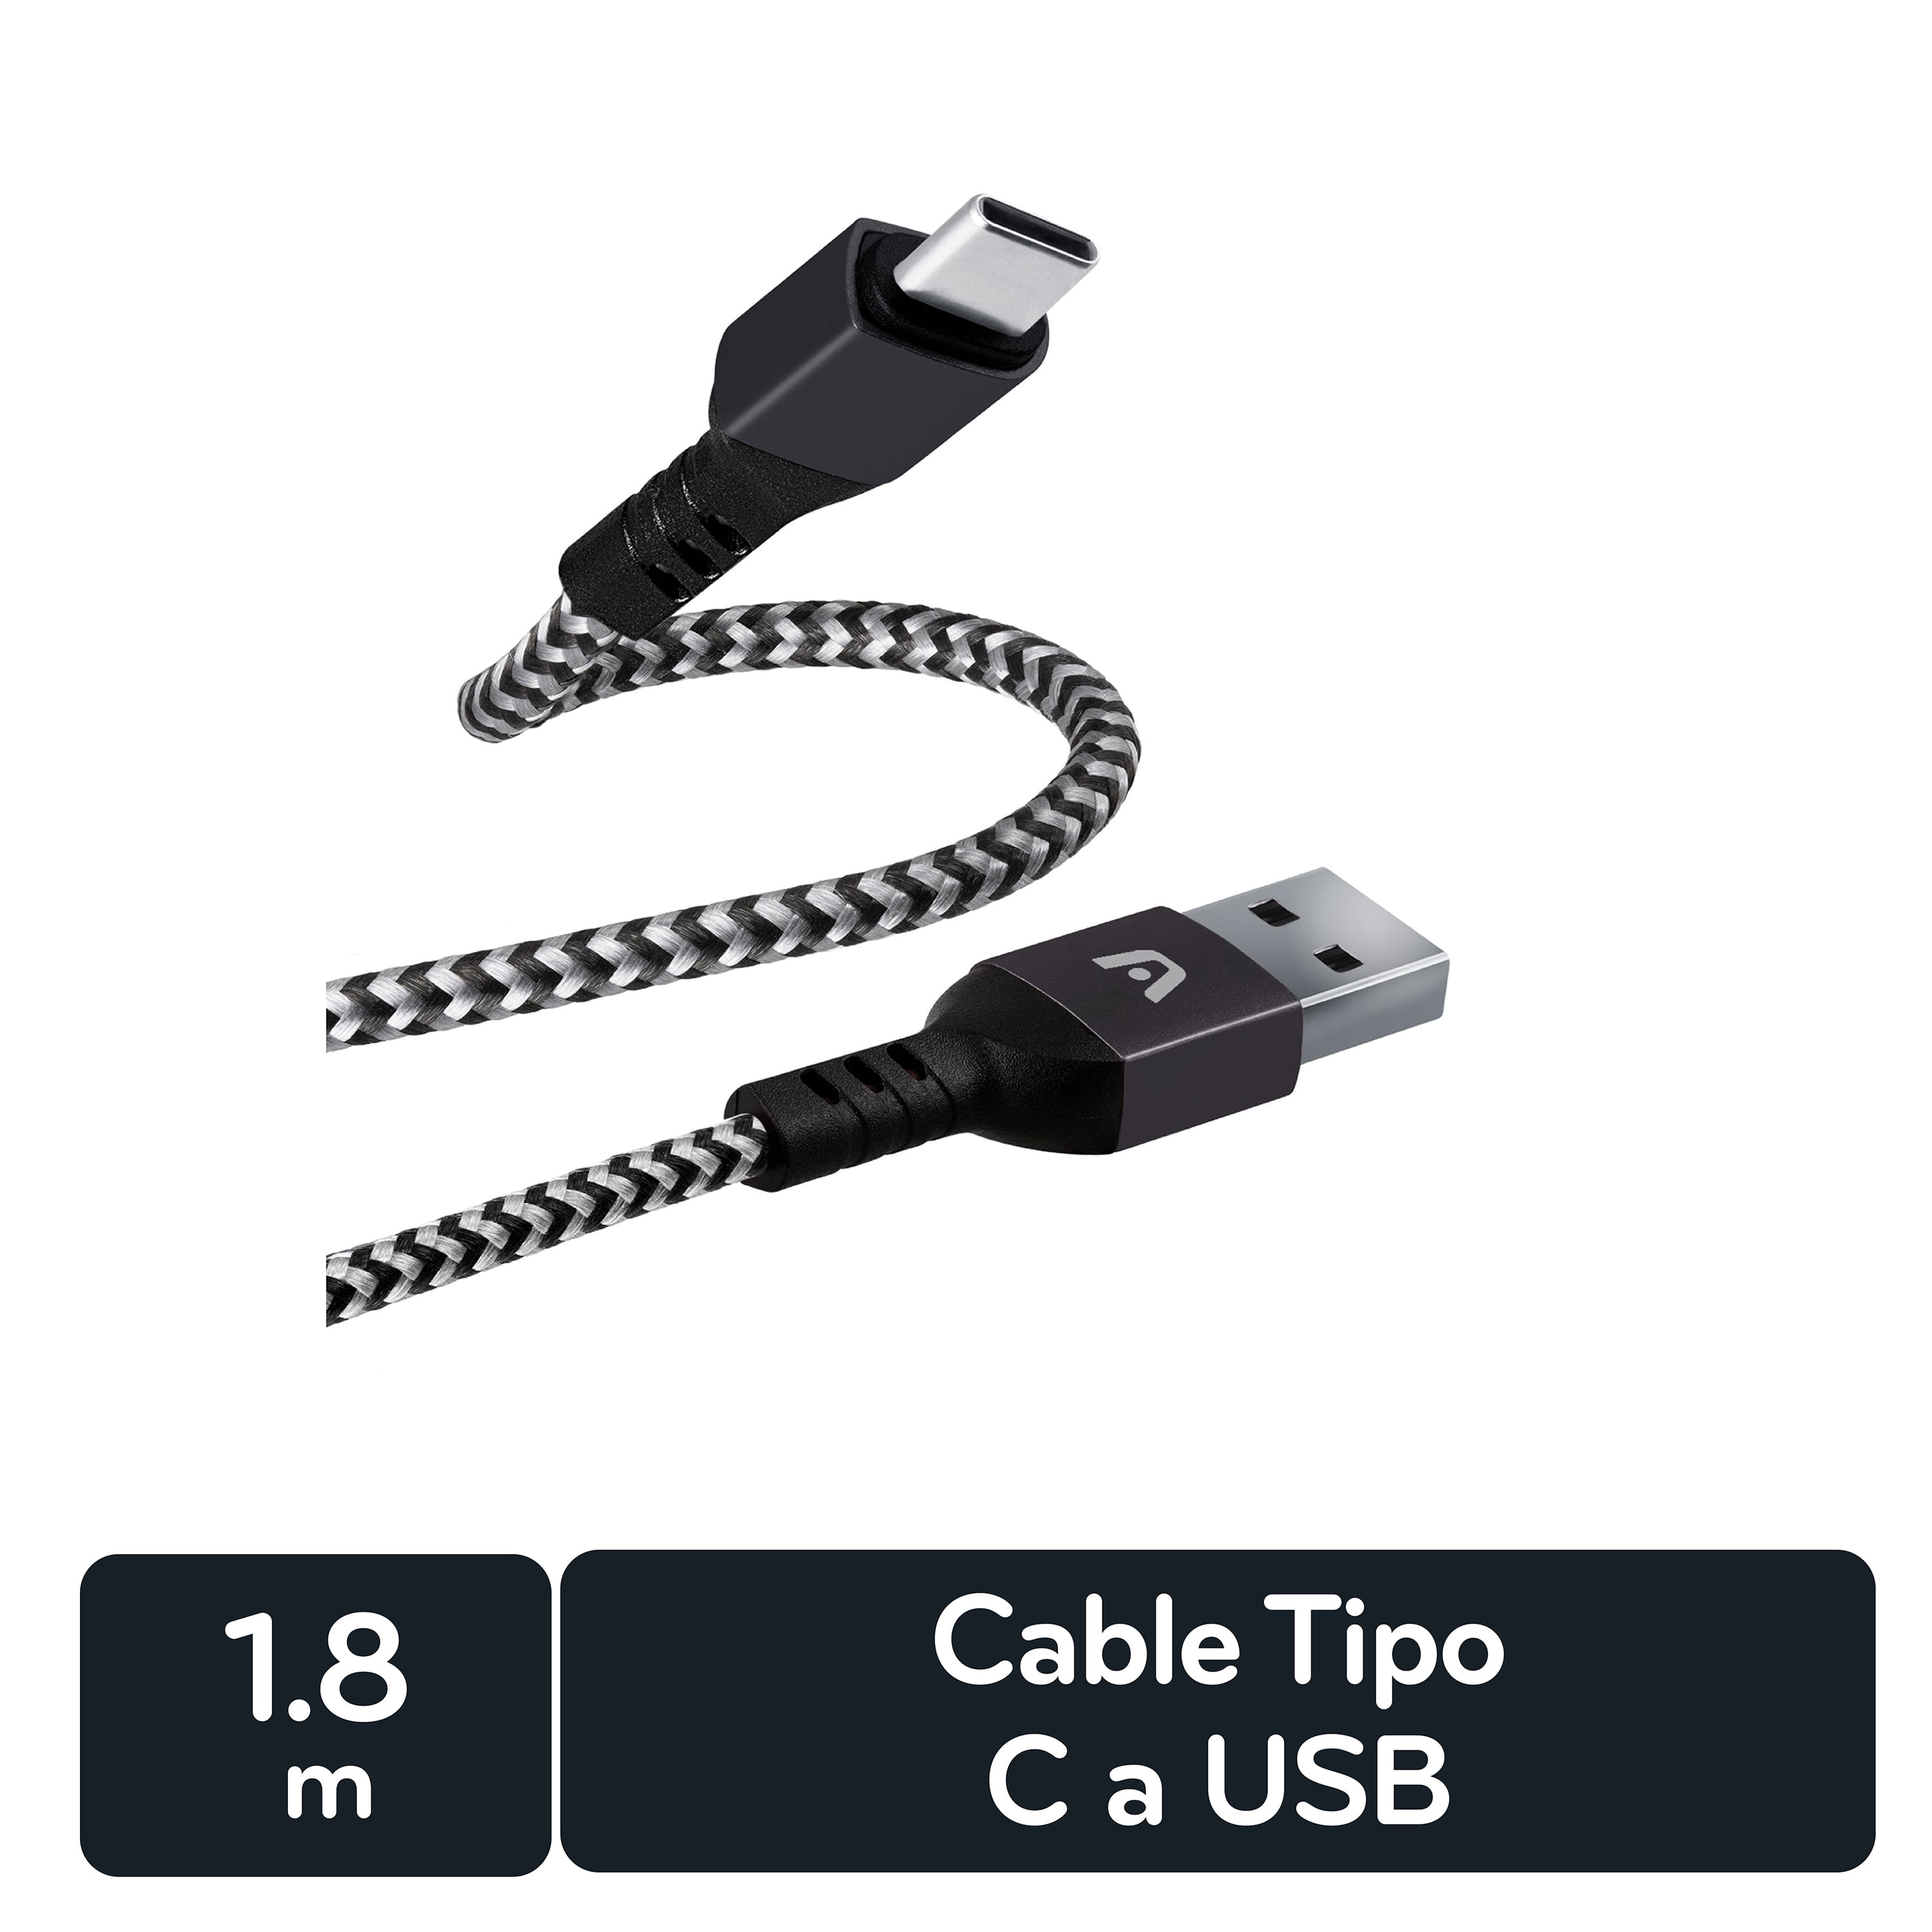 Comprar Cable Metalico Auxiliar Durabrand USB-A Tipo C